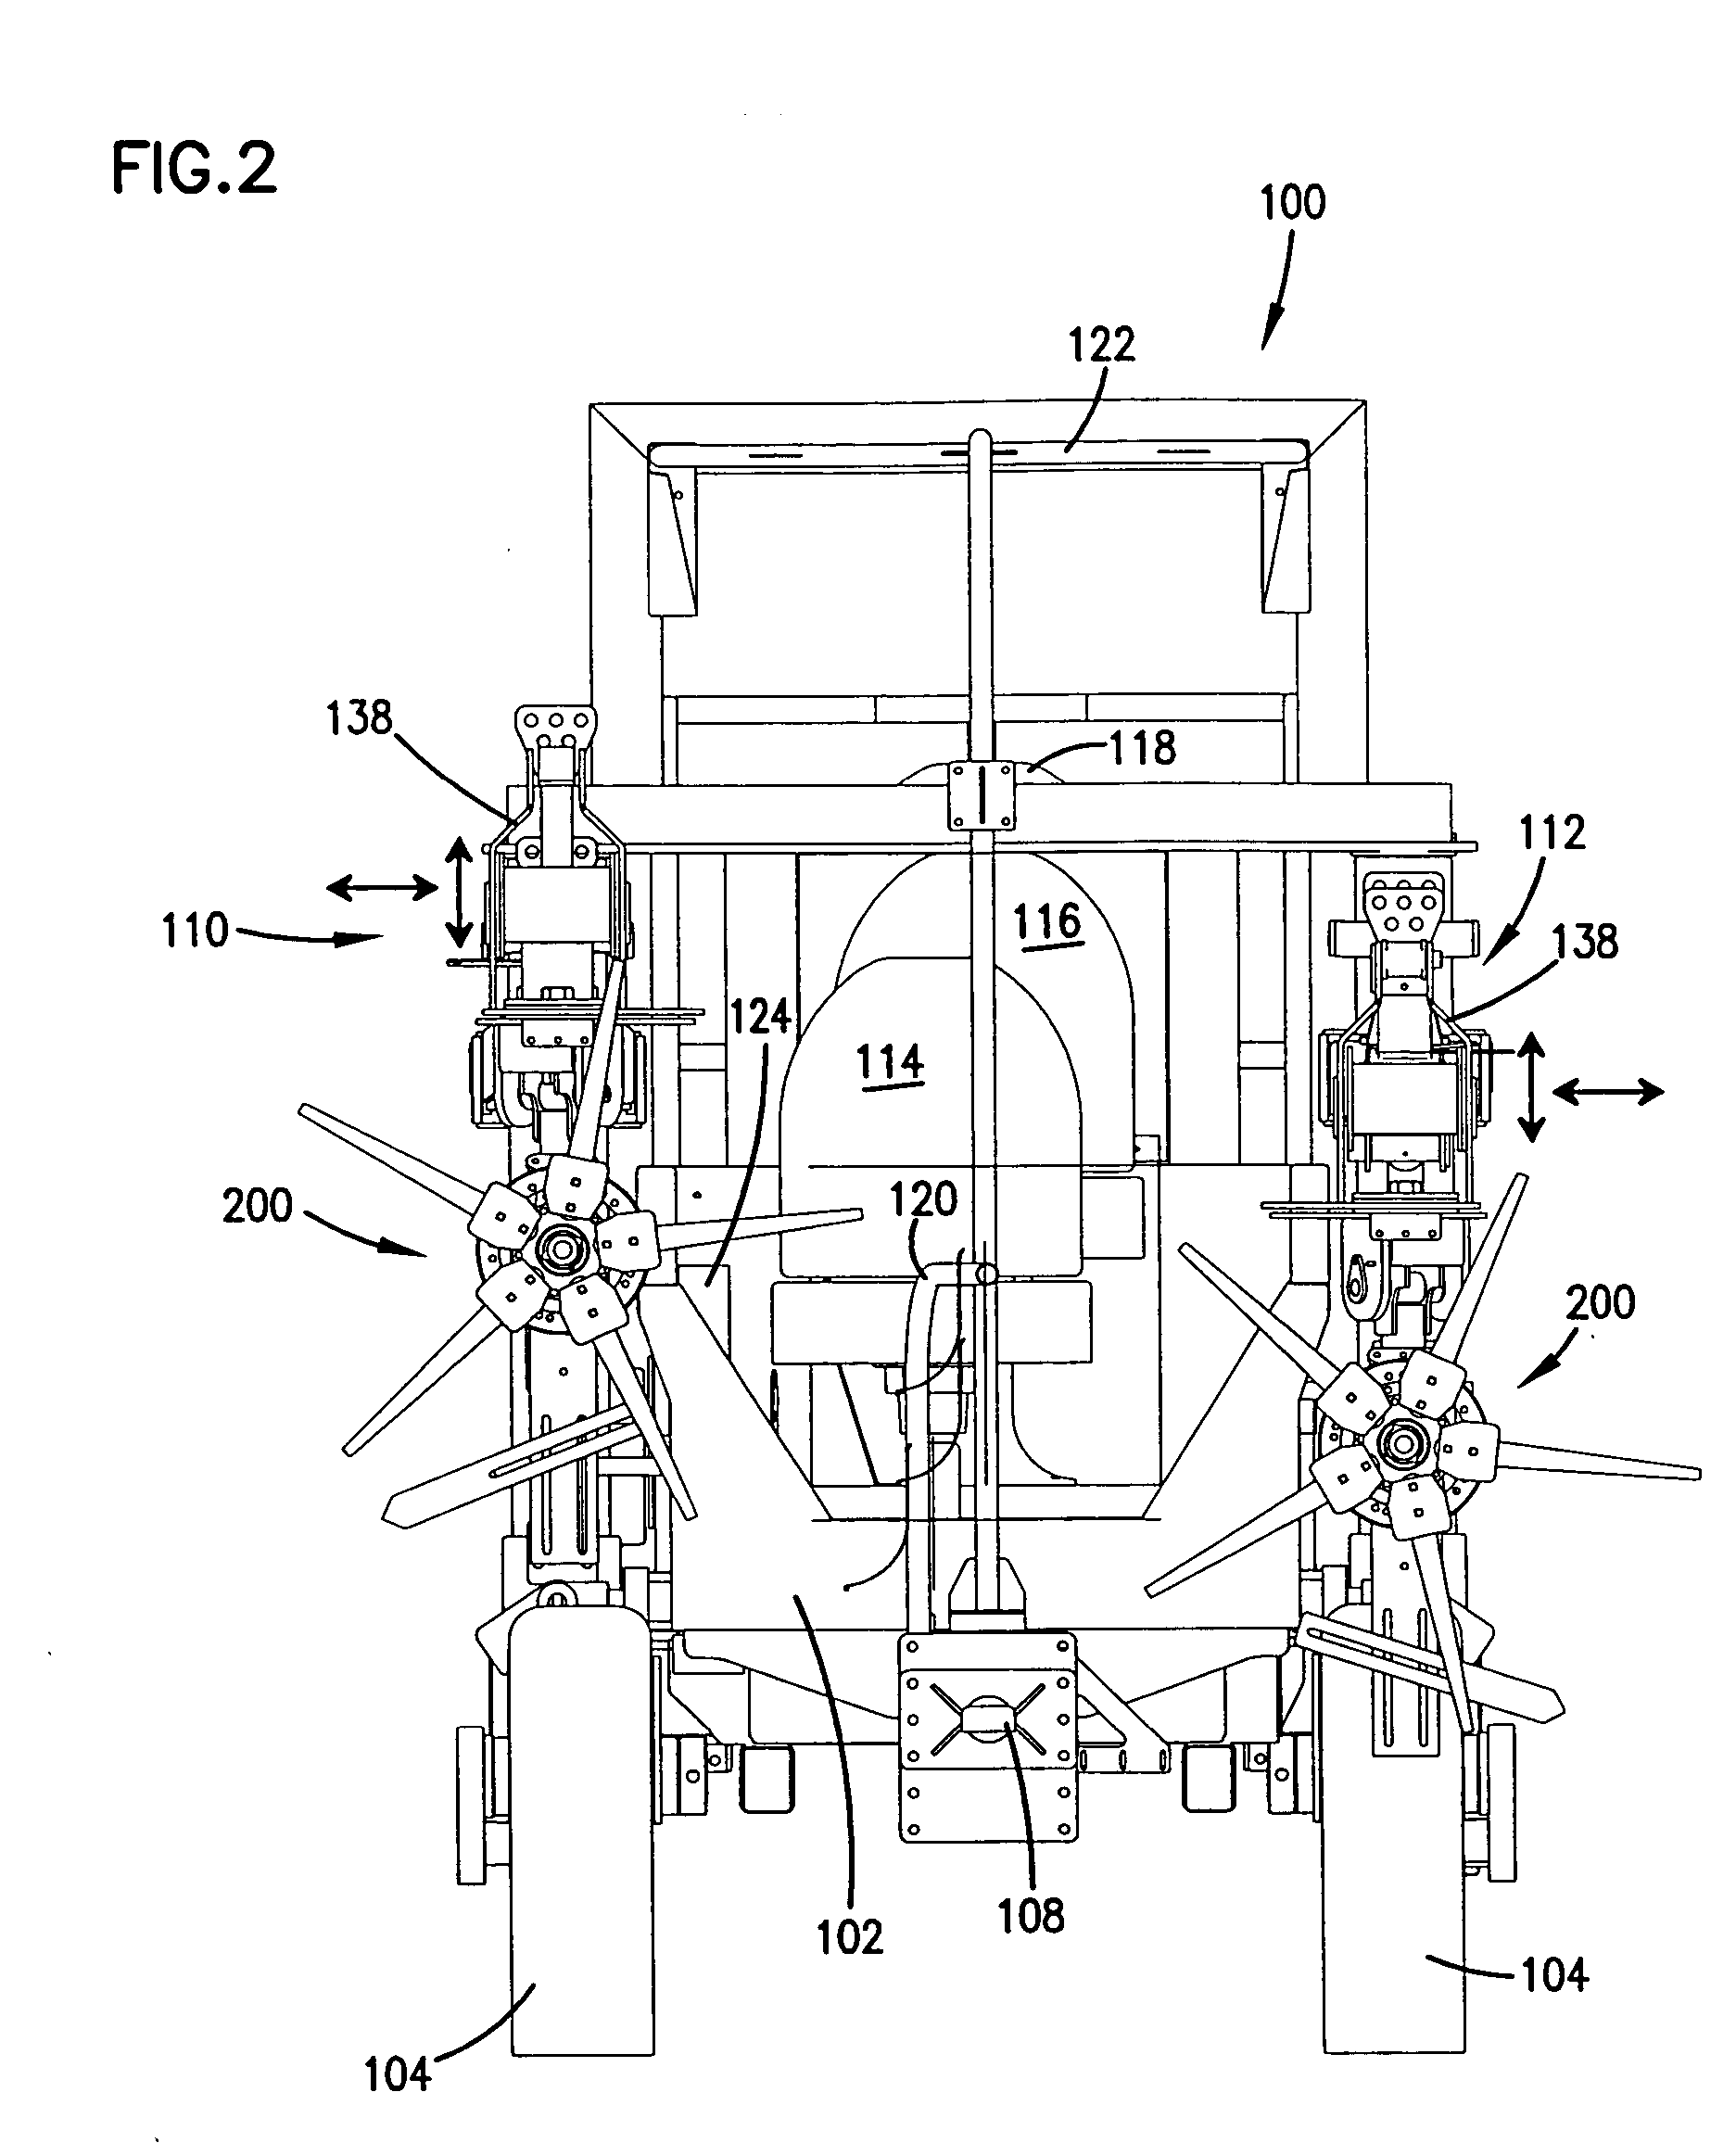 Control apparatus and method